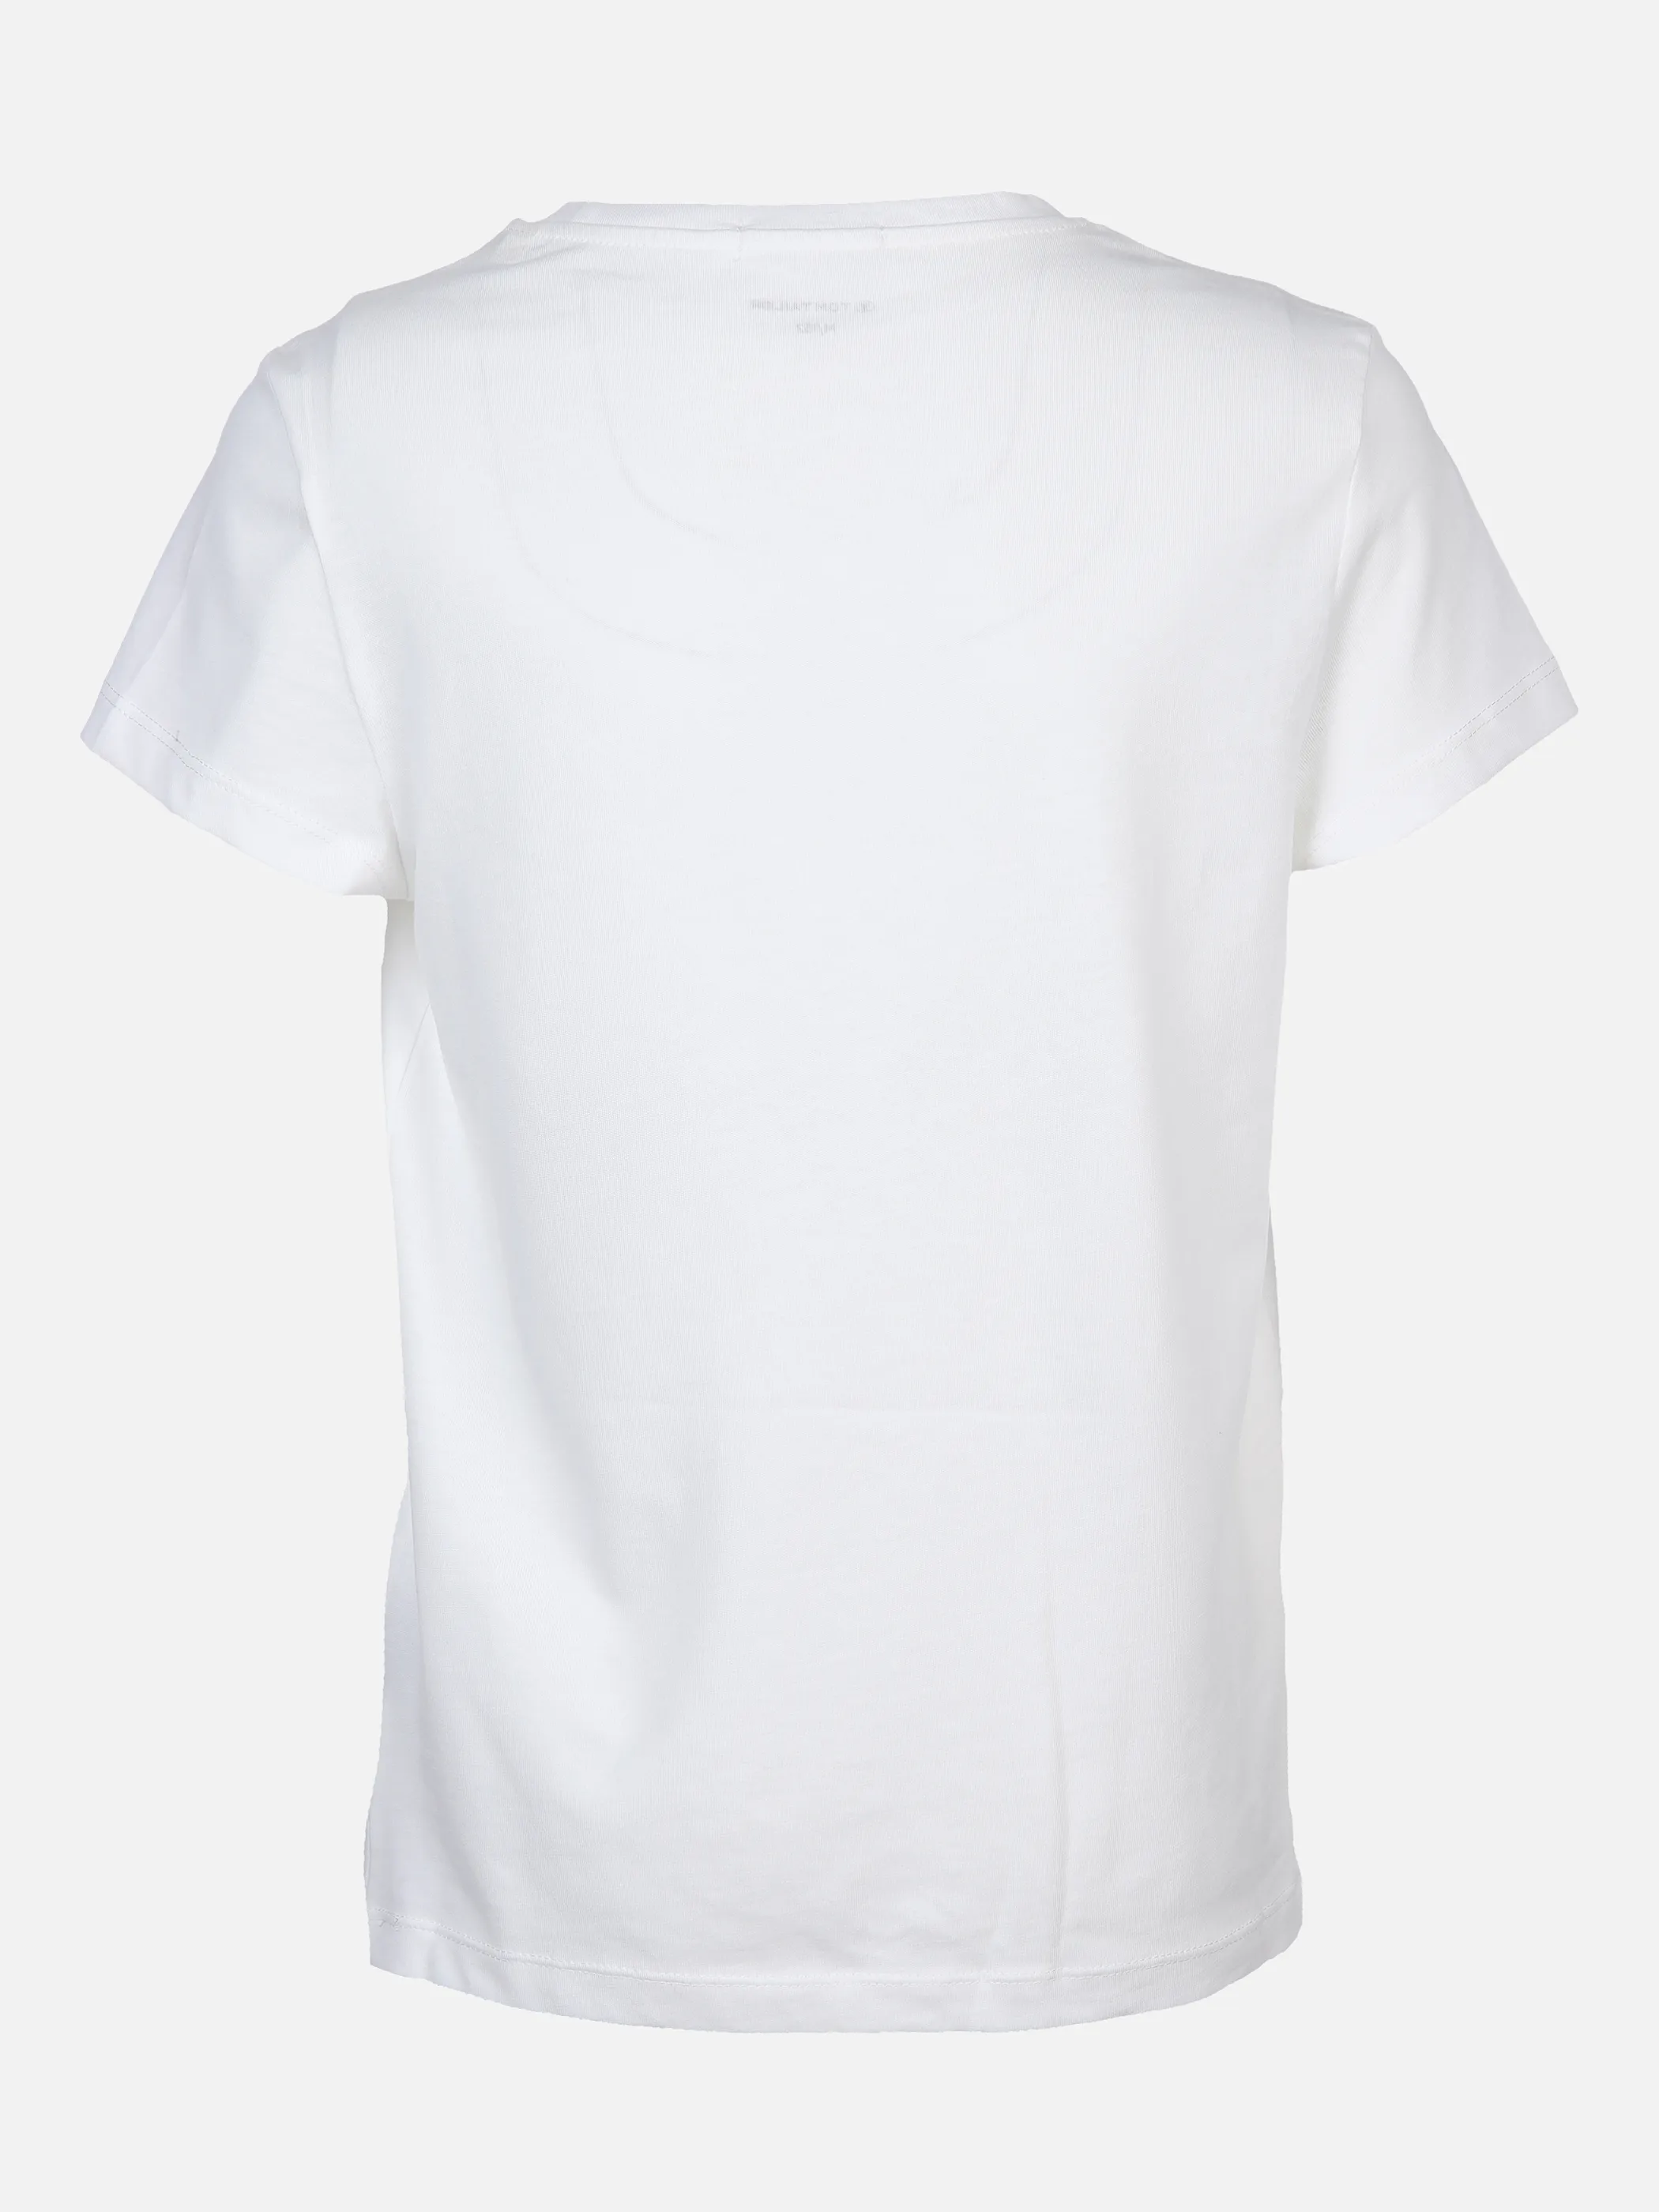 Tom Tailor 1030670 printed t-shirt Weiß 862628 10315 2